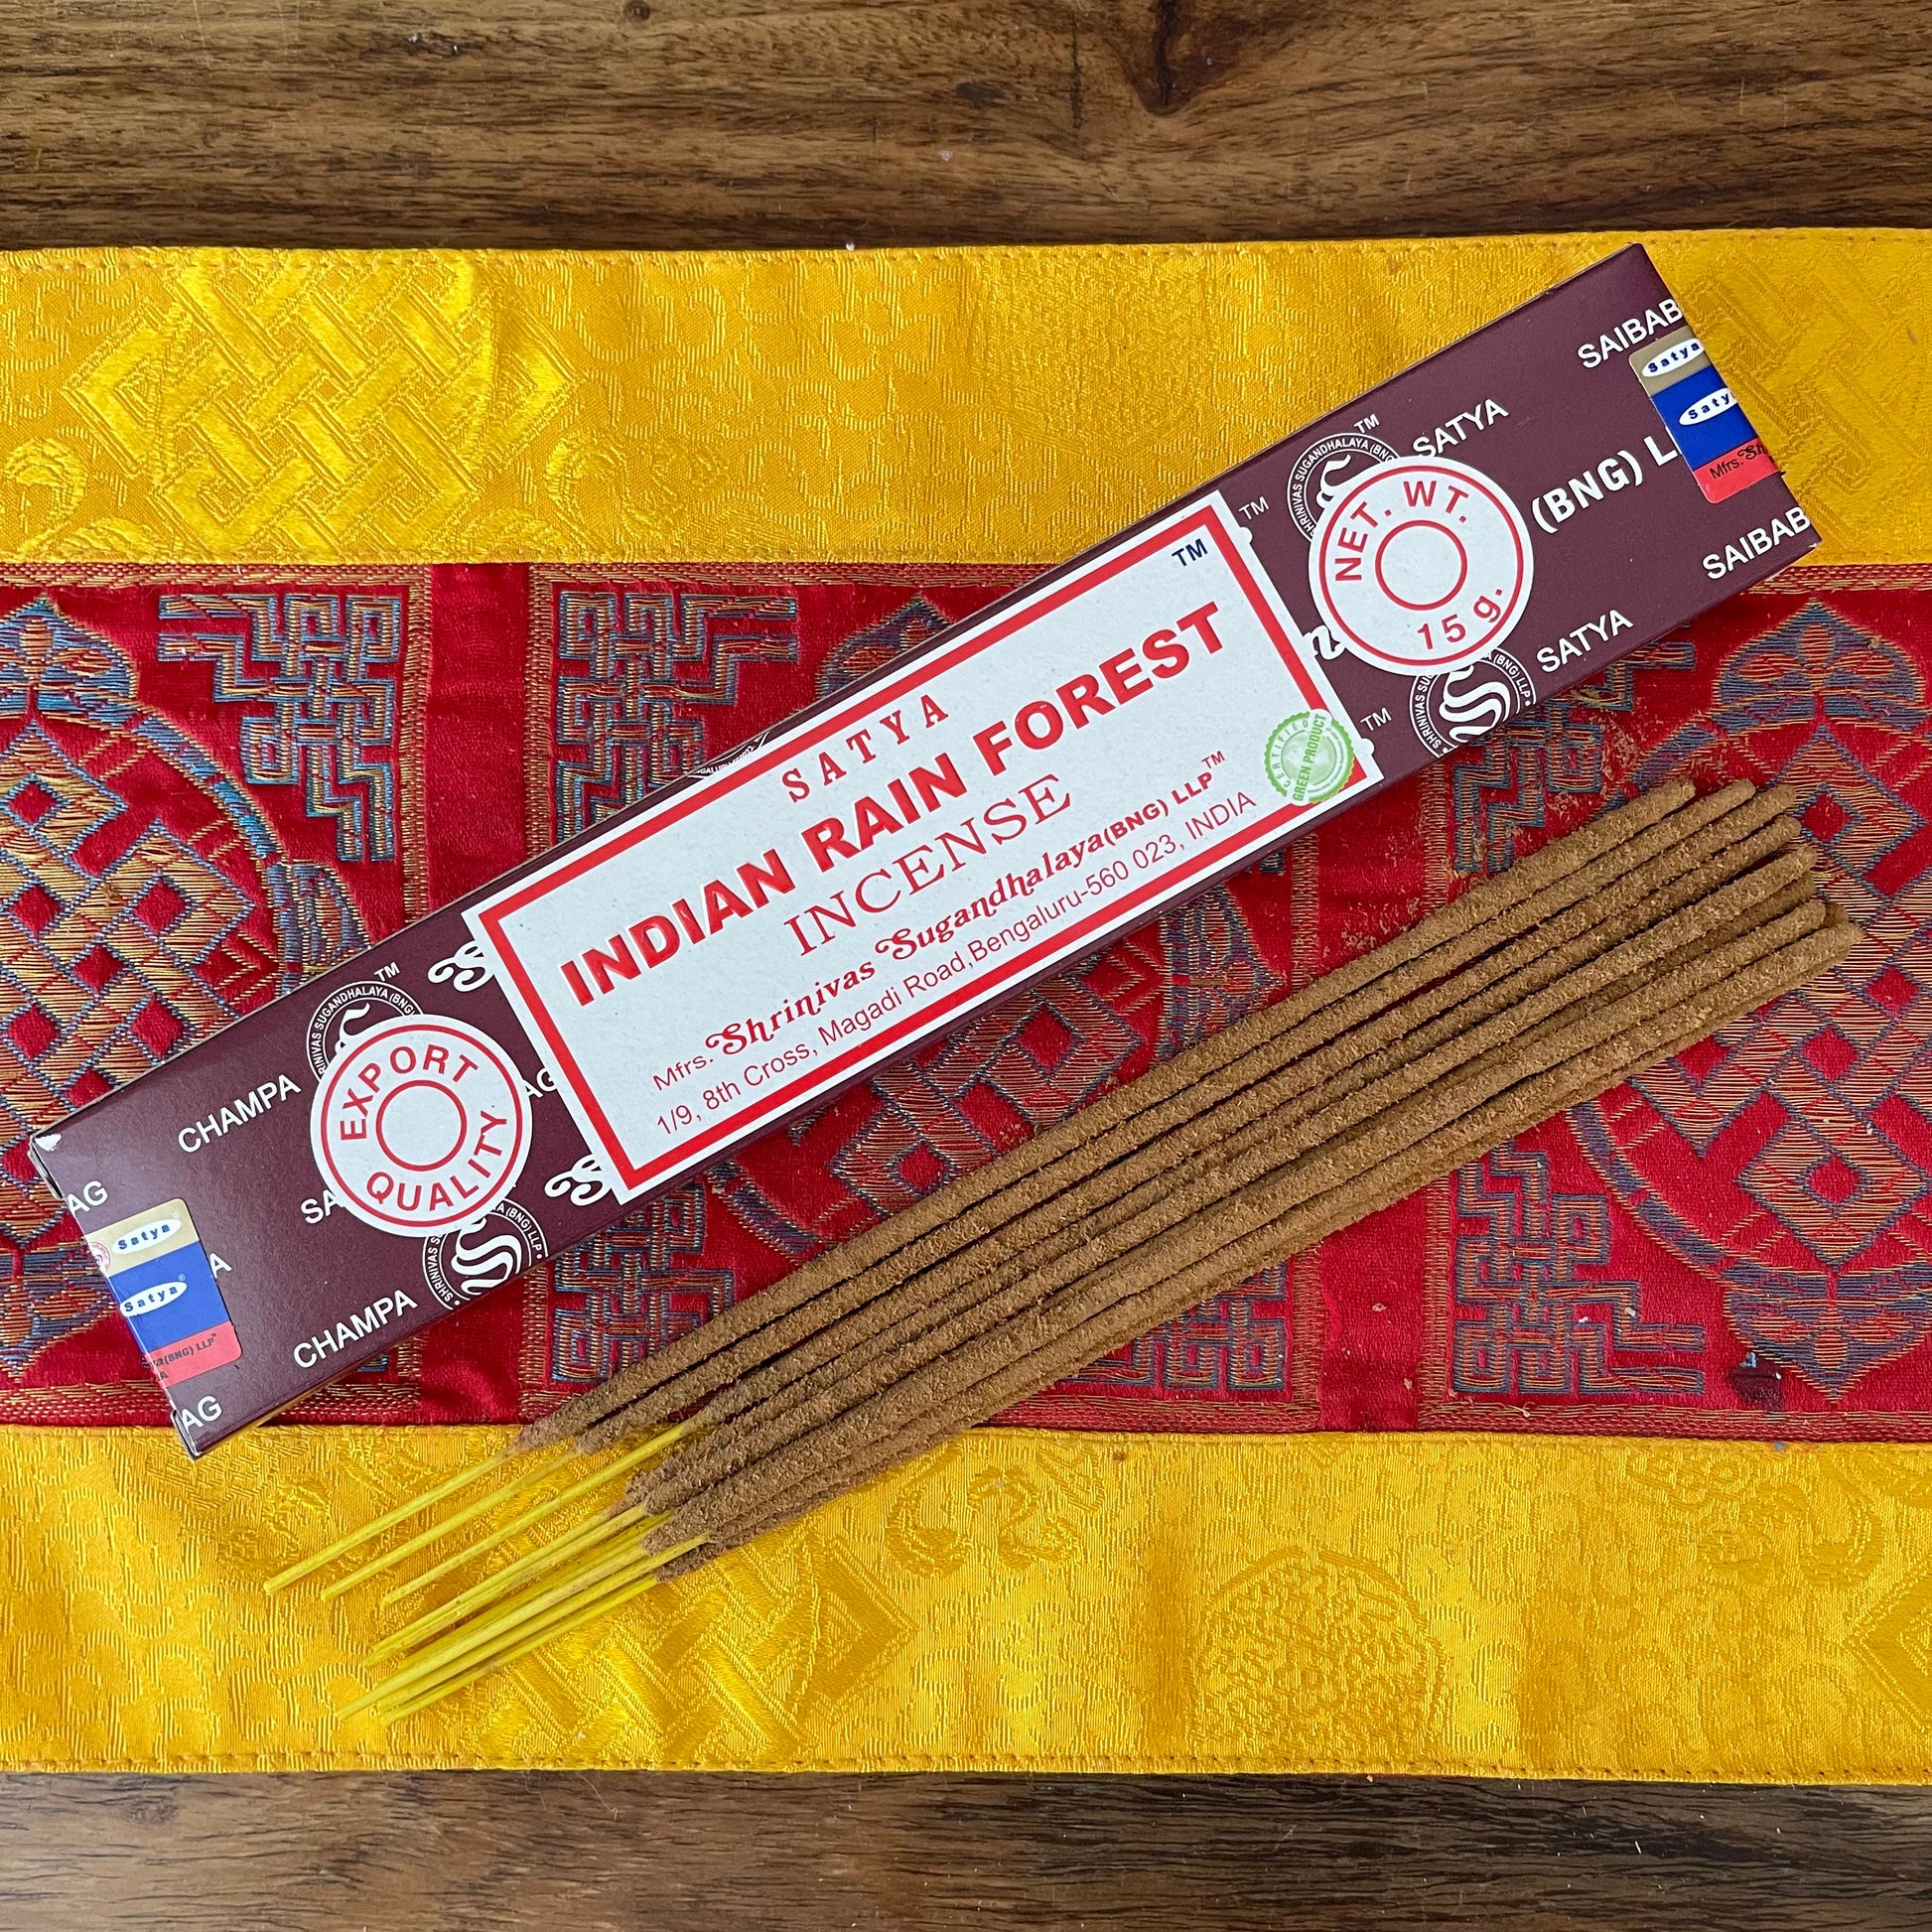 Satya Indian Rain Forest  Incense sticks